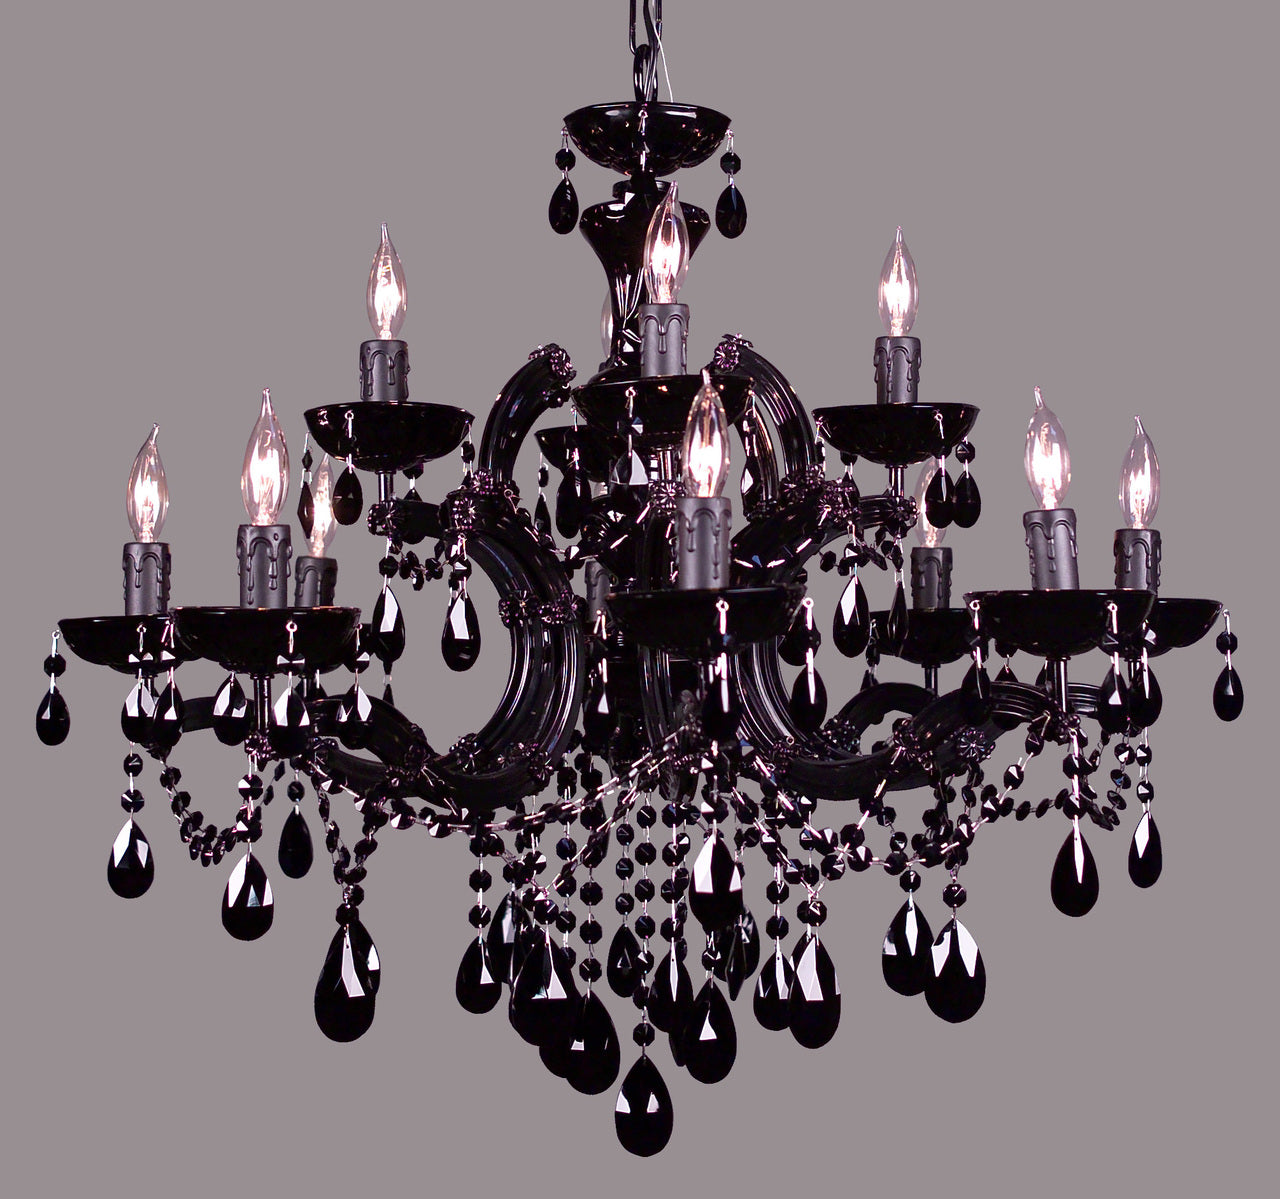 Classic Lighting 8344 BBLK CBK Rialto Traditional Crystal Chandelier in Black